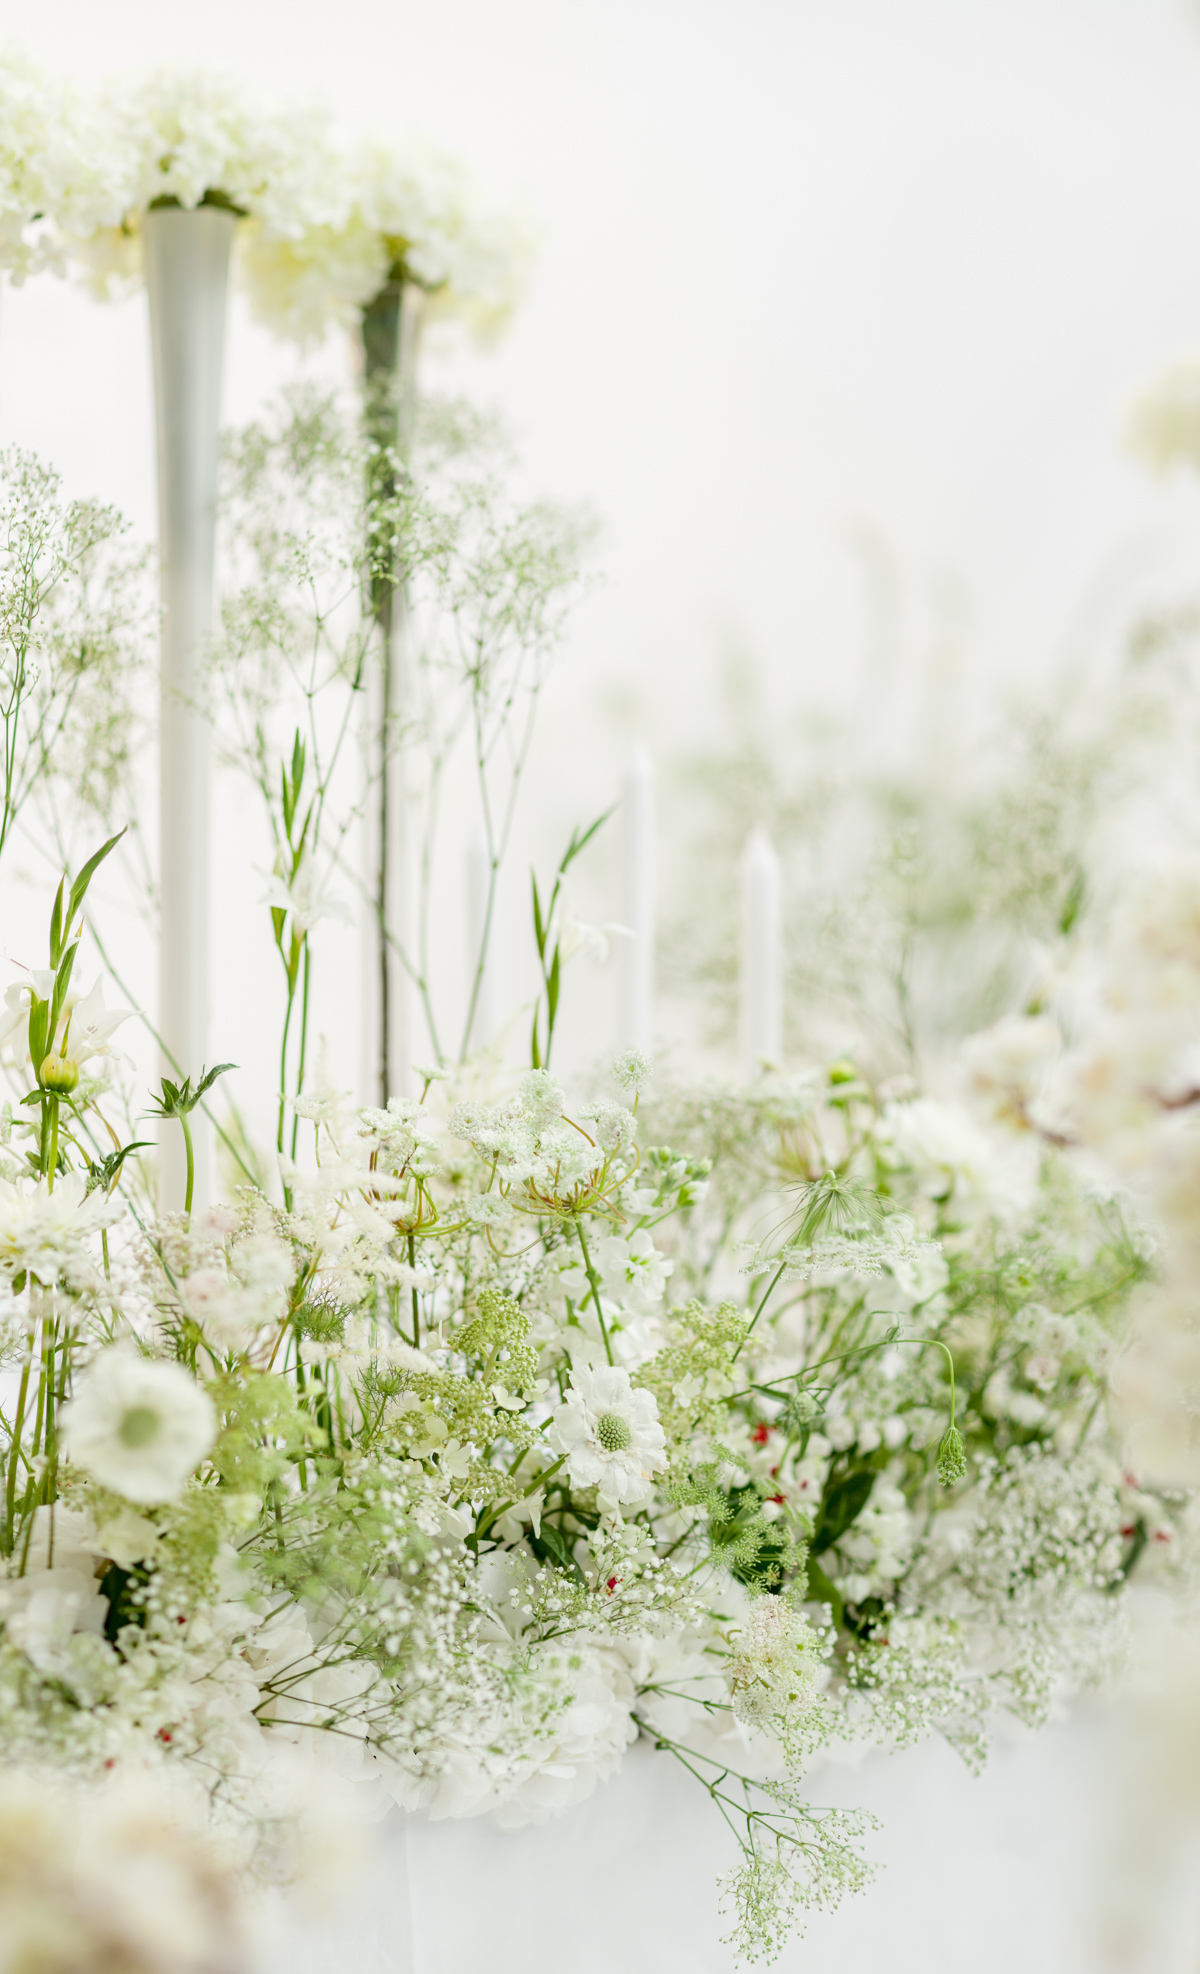 An all-white floral fairytale by Zita Elze - award winning wedding florist